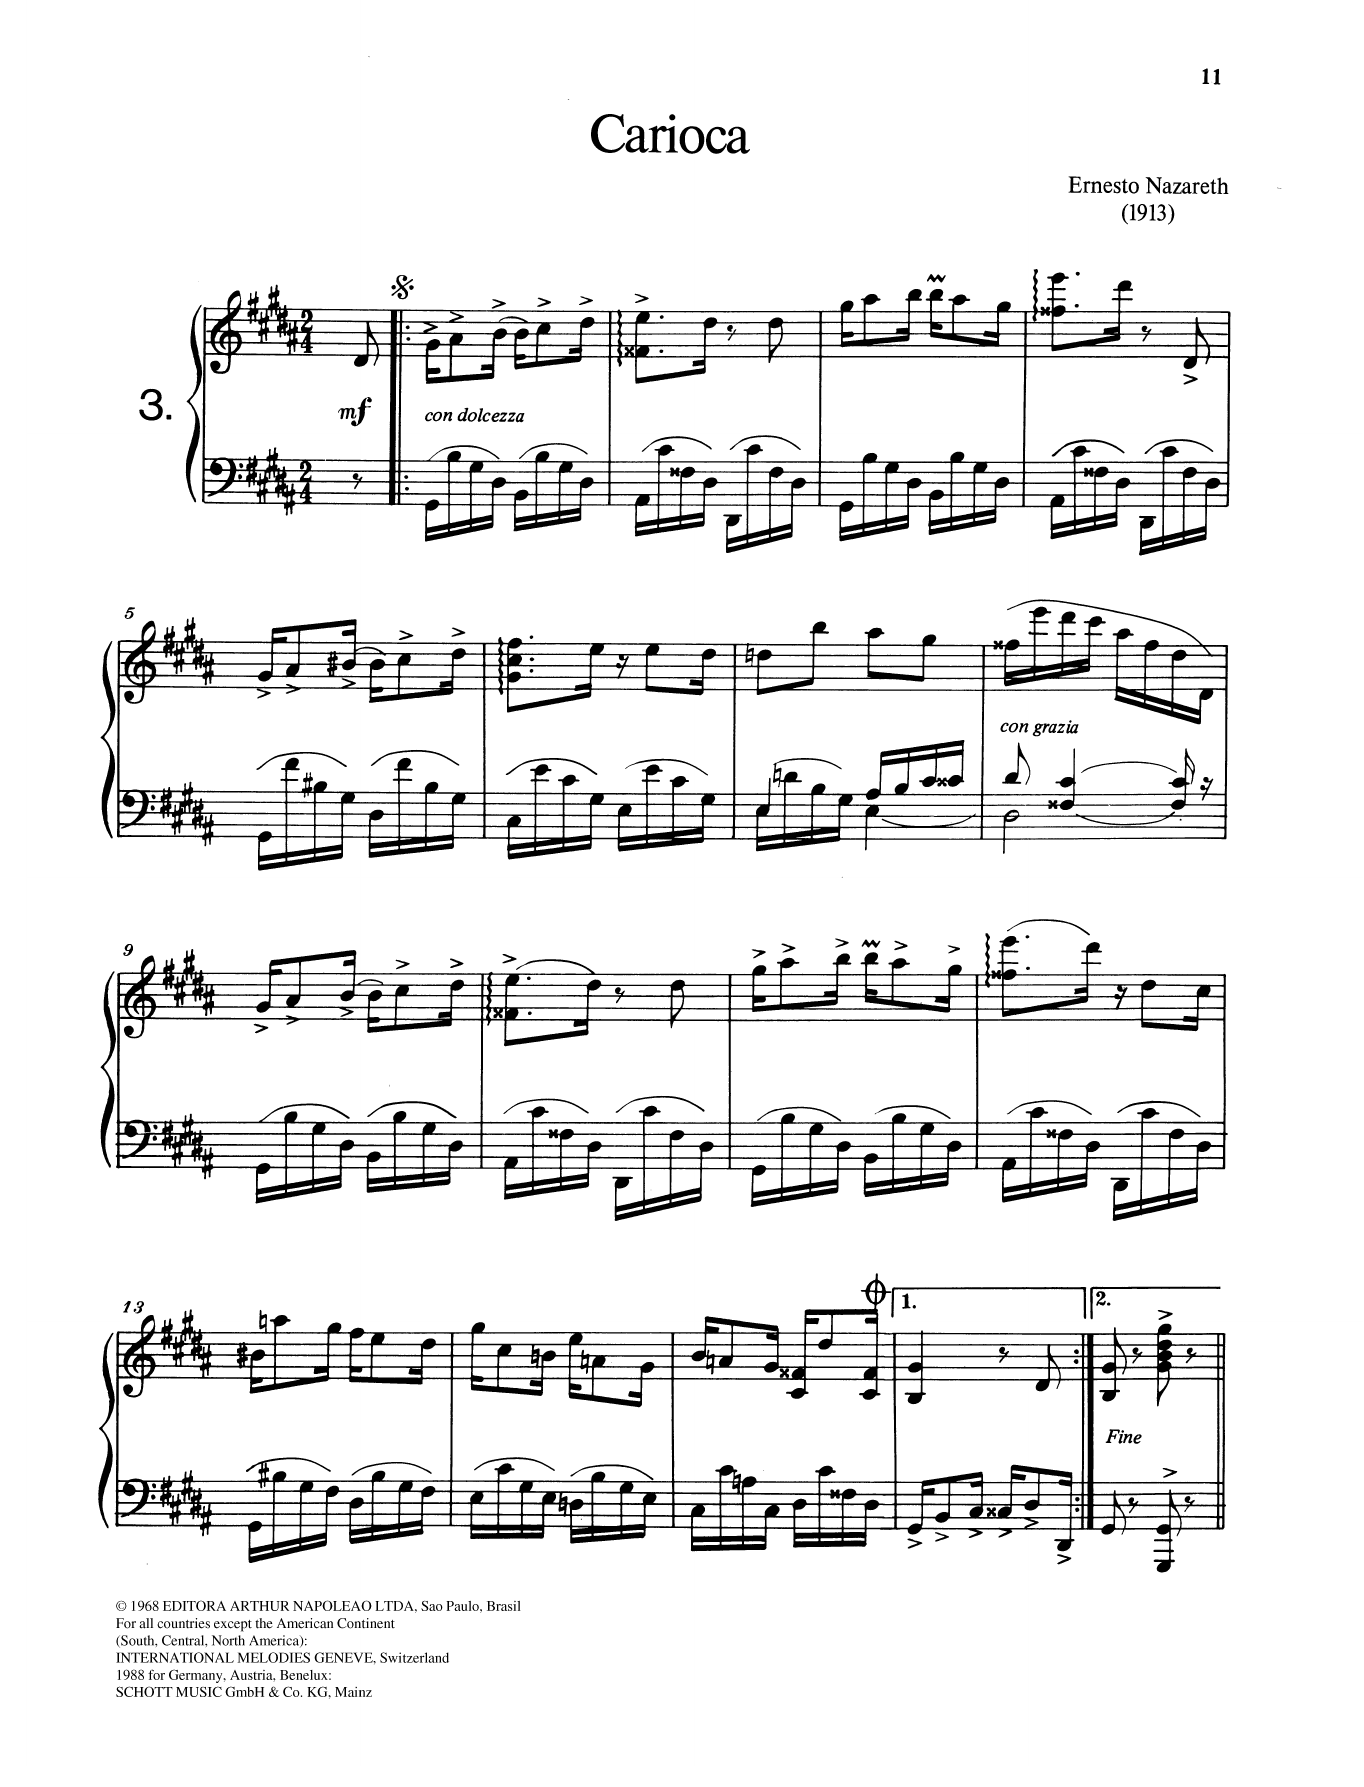 Ernesto Nazareth Carioca Sheet Music Notes & Chords for Piano Solo - Download or Print PDF